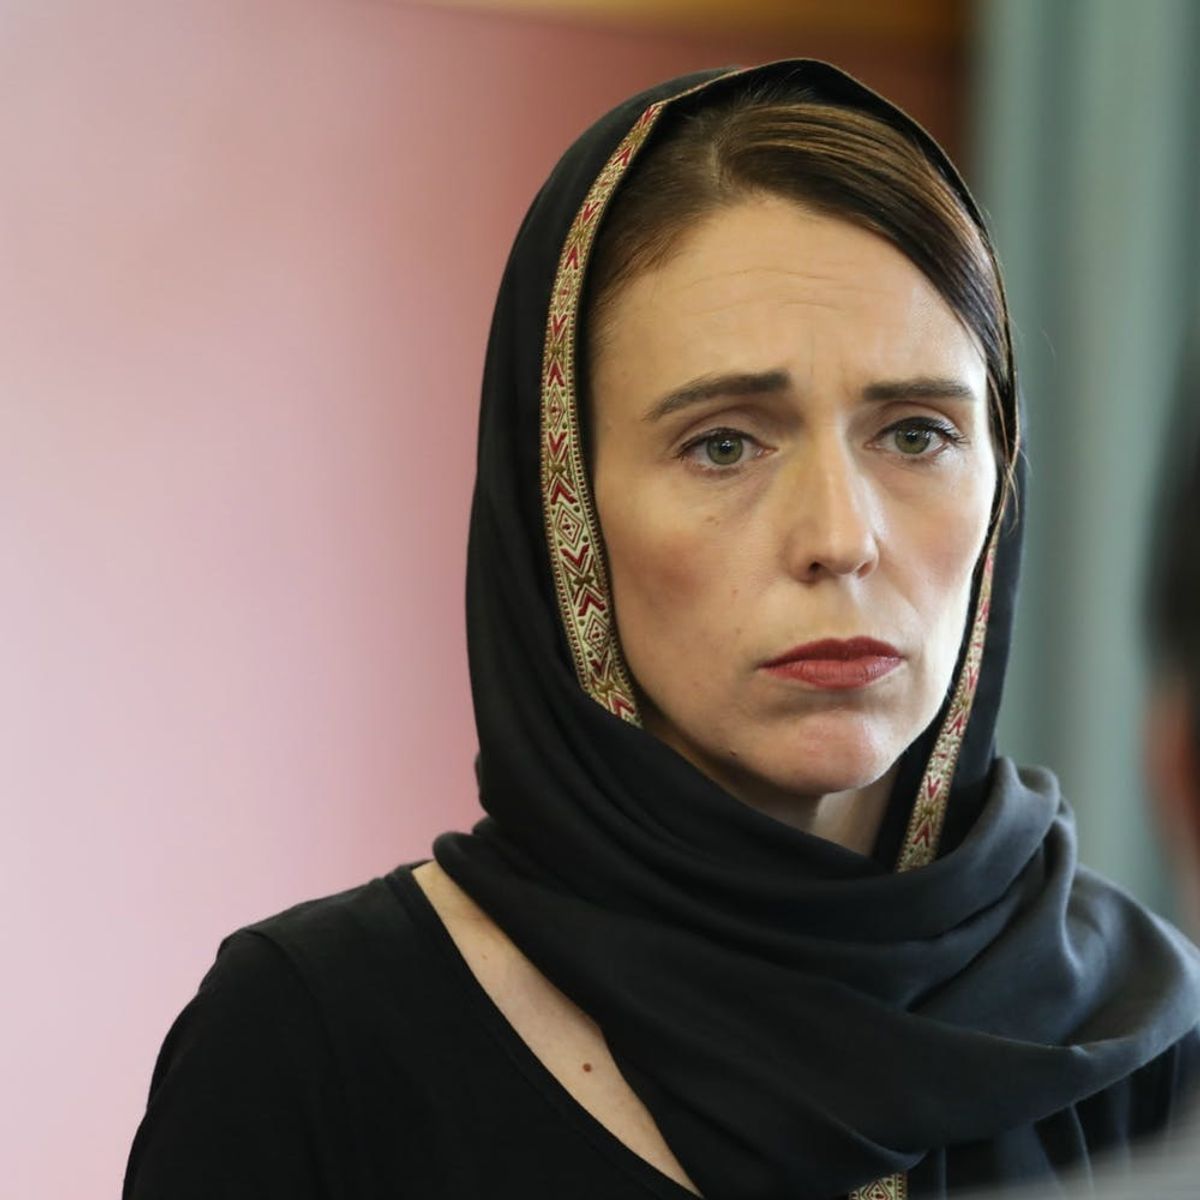 New Zealand PM Jacinda Ardern Has Proven the Need for Progressive Women Leaders